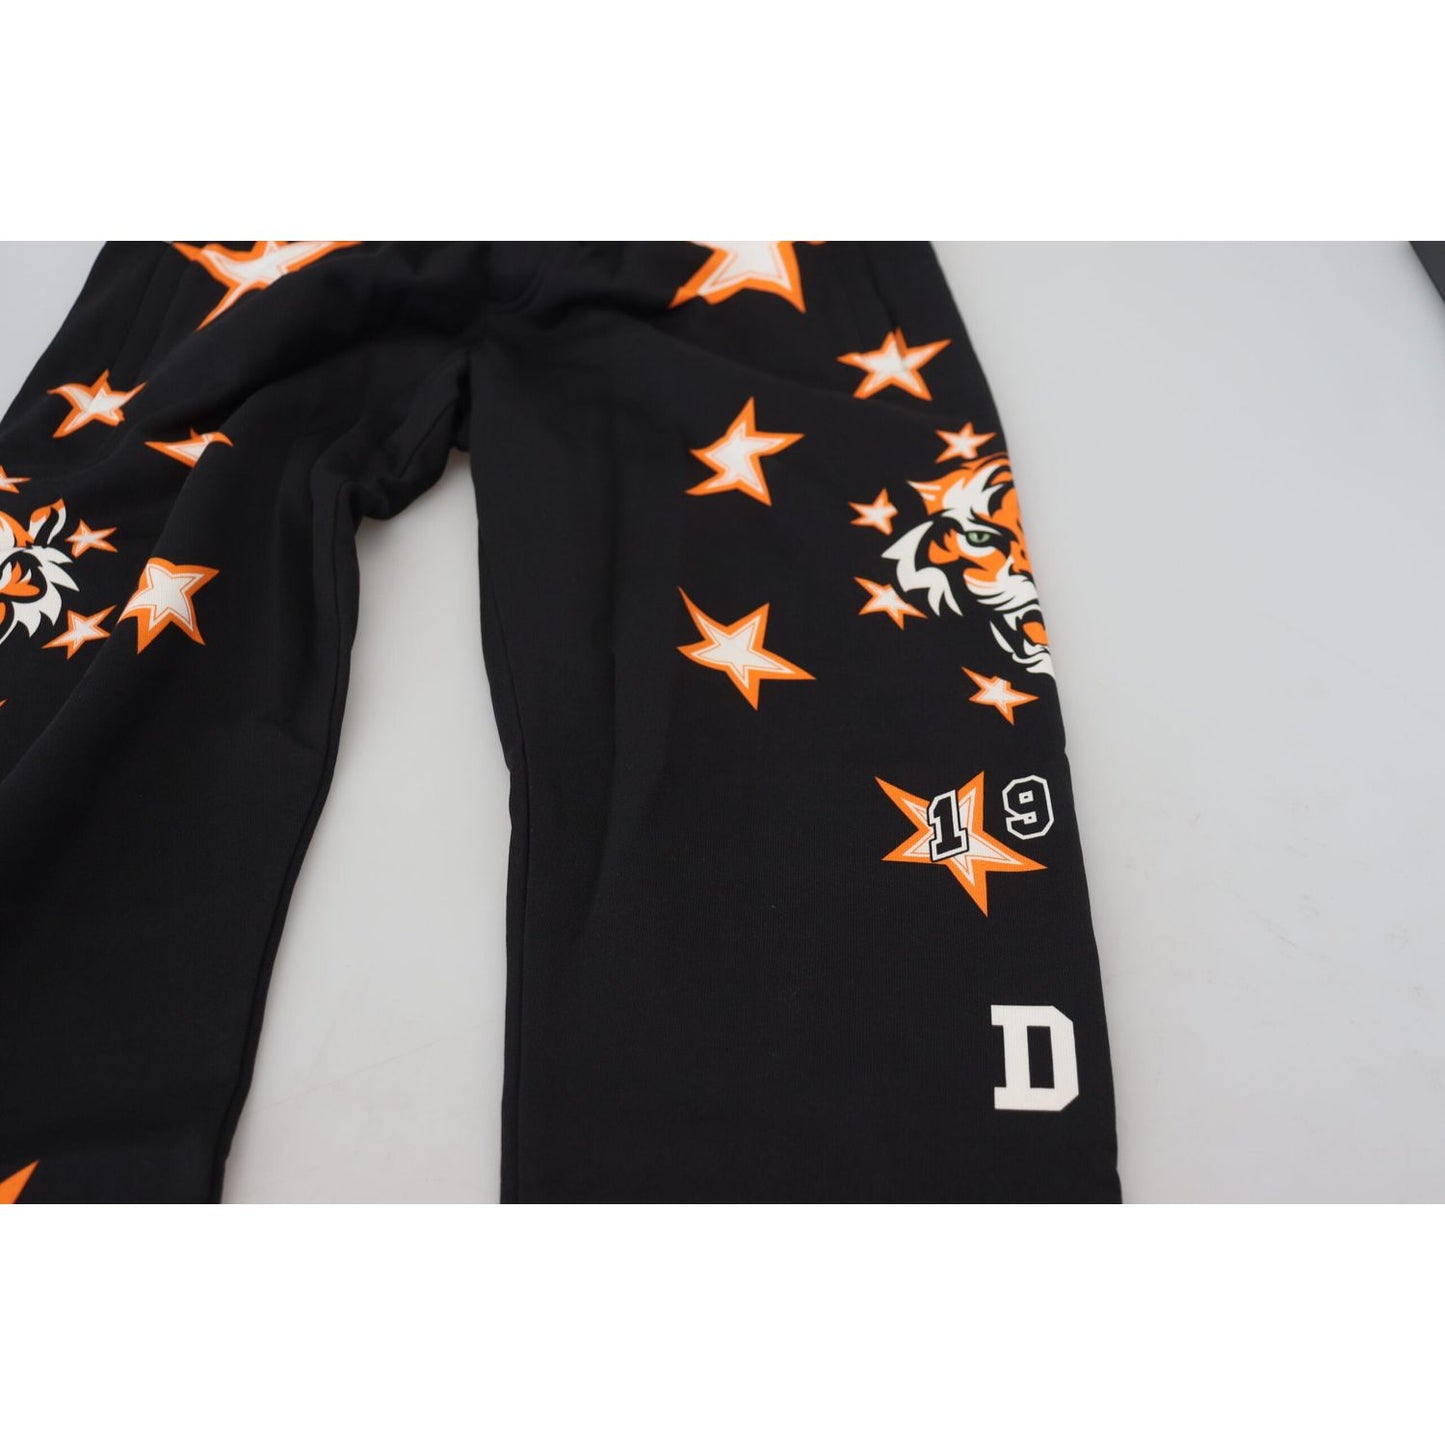 Dolce & Gabbana Elegant Black Star Casual Sweatpants black-orange-star-trousers-sport-pants